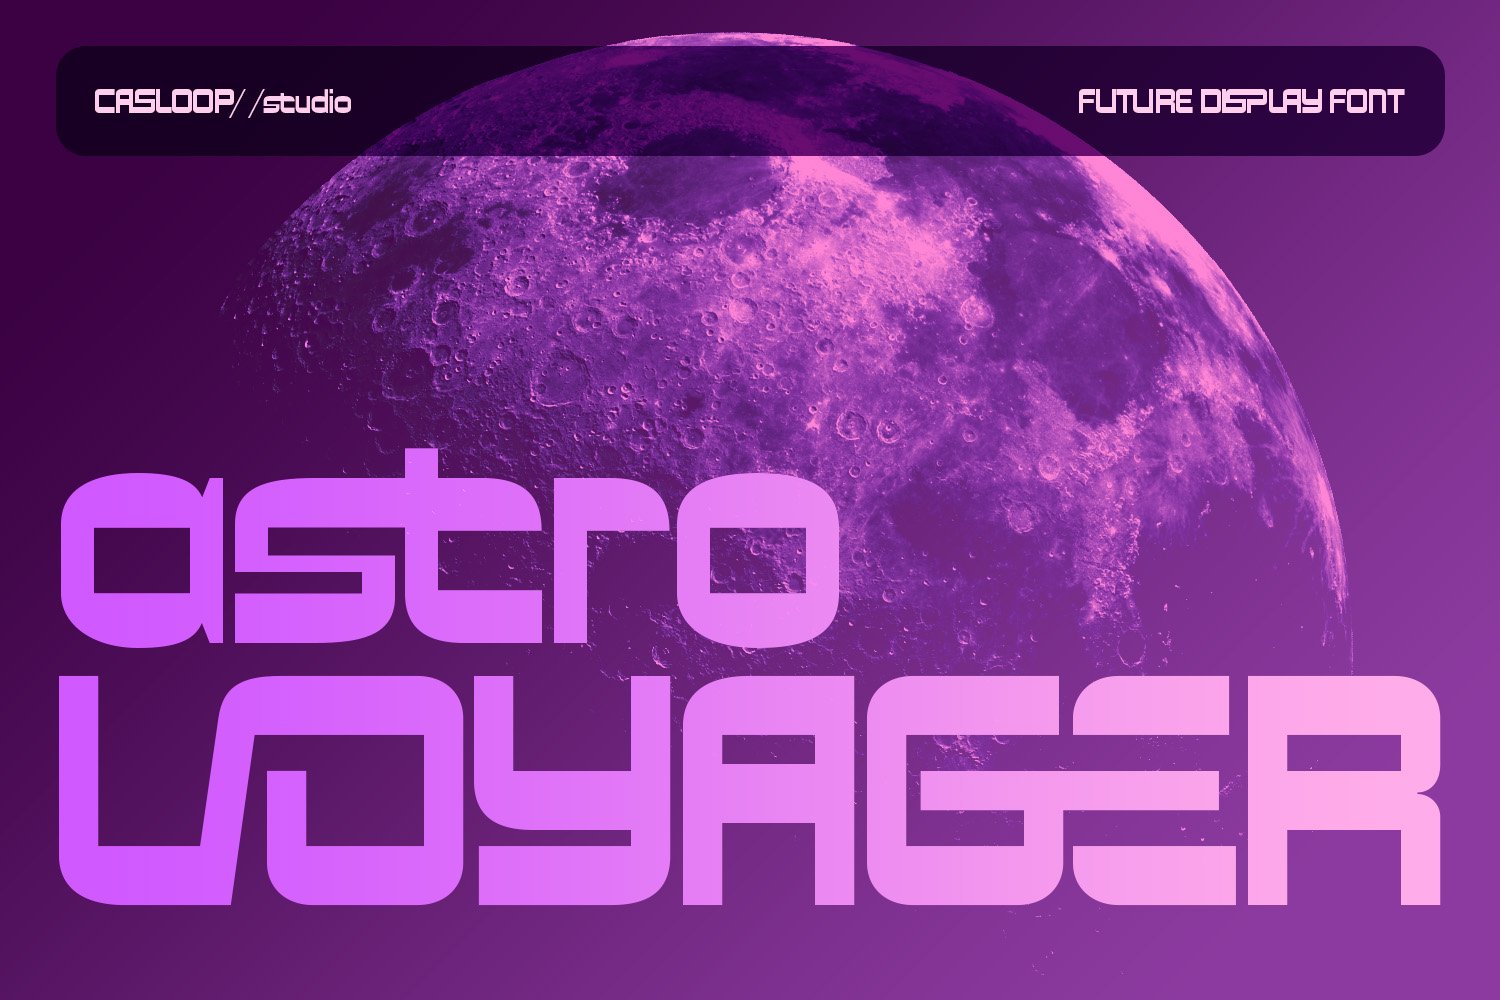 Astro Voyager Futuristic Typeface cover image.